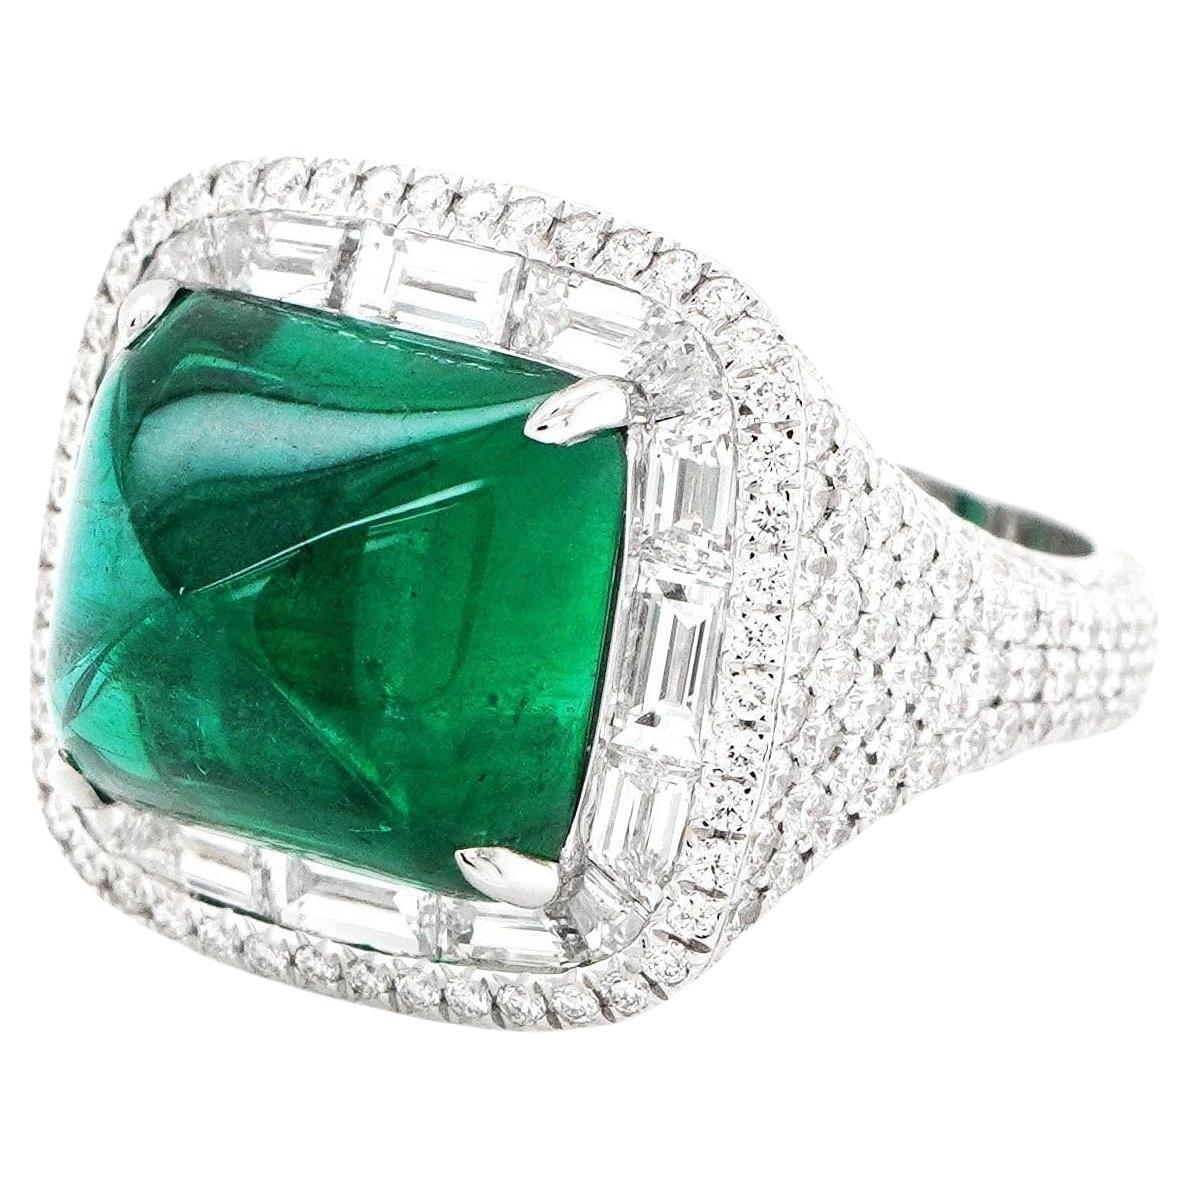 BENJAMIN FINE JEWELRY 7.12 cts Emerald with Diamond 18K Ring